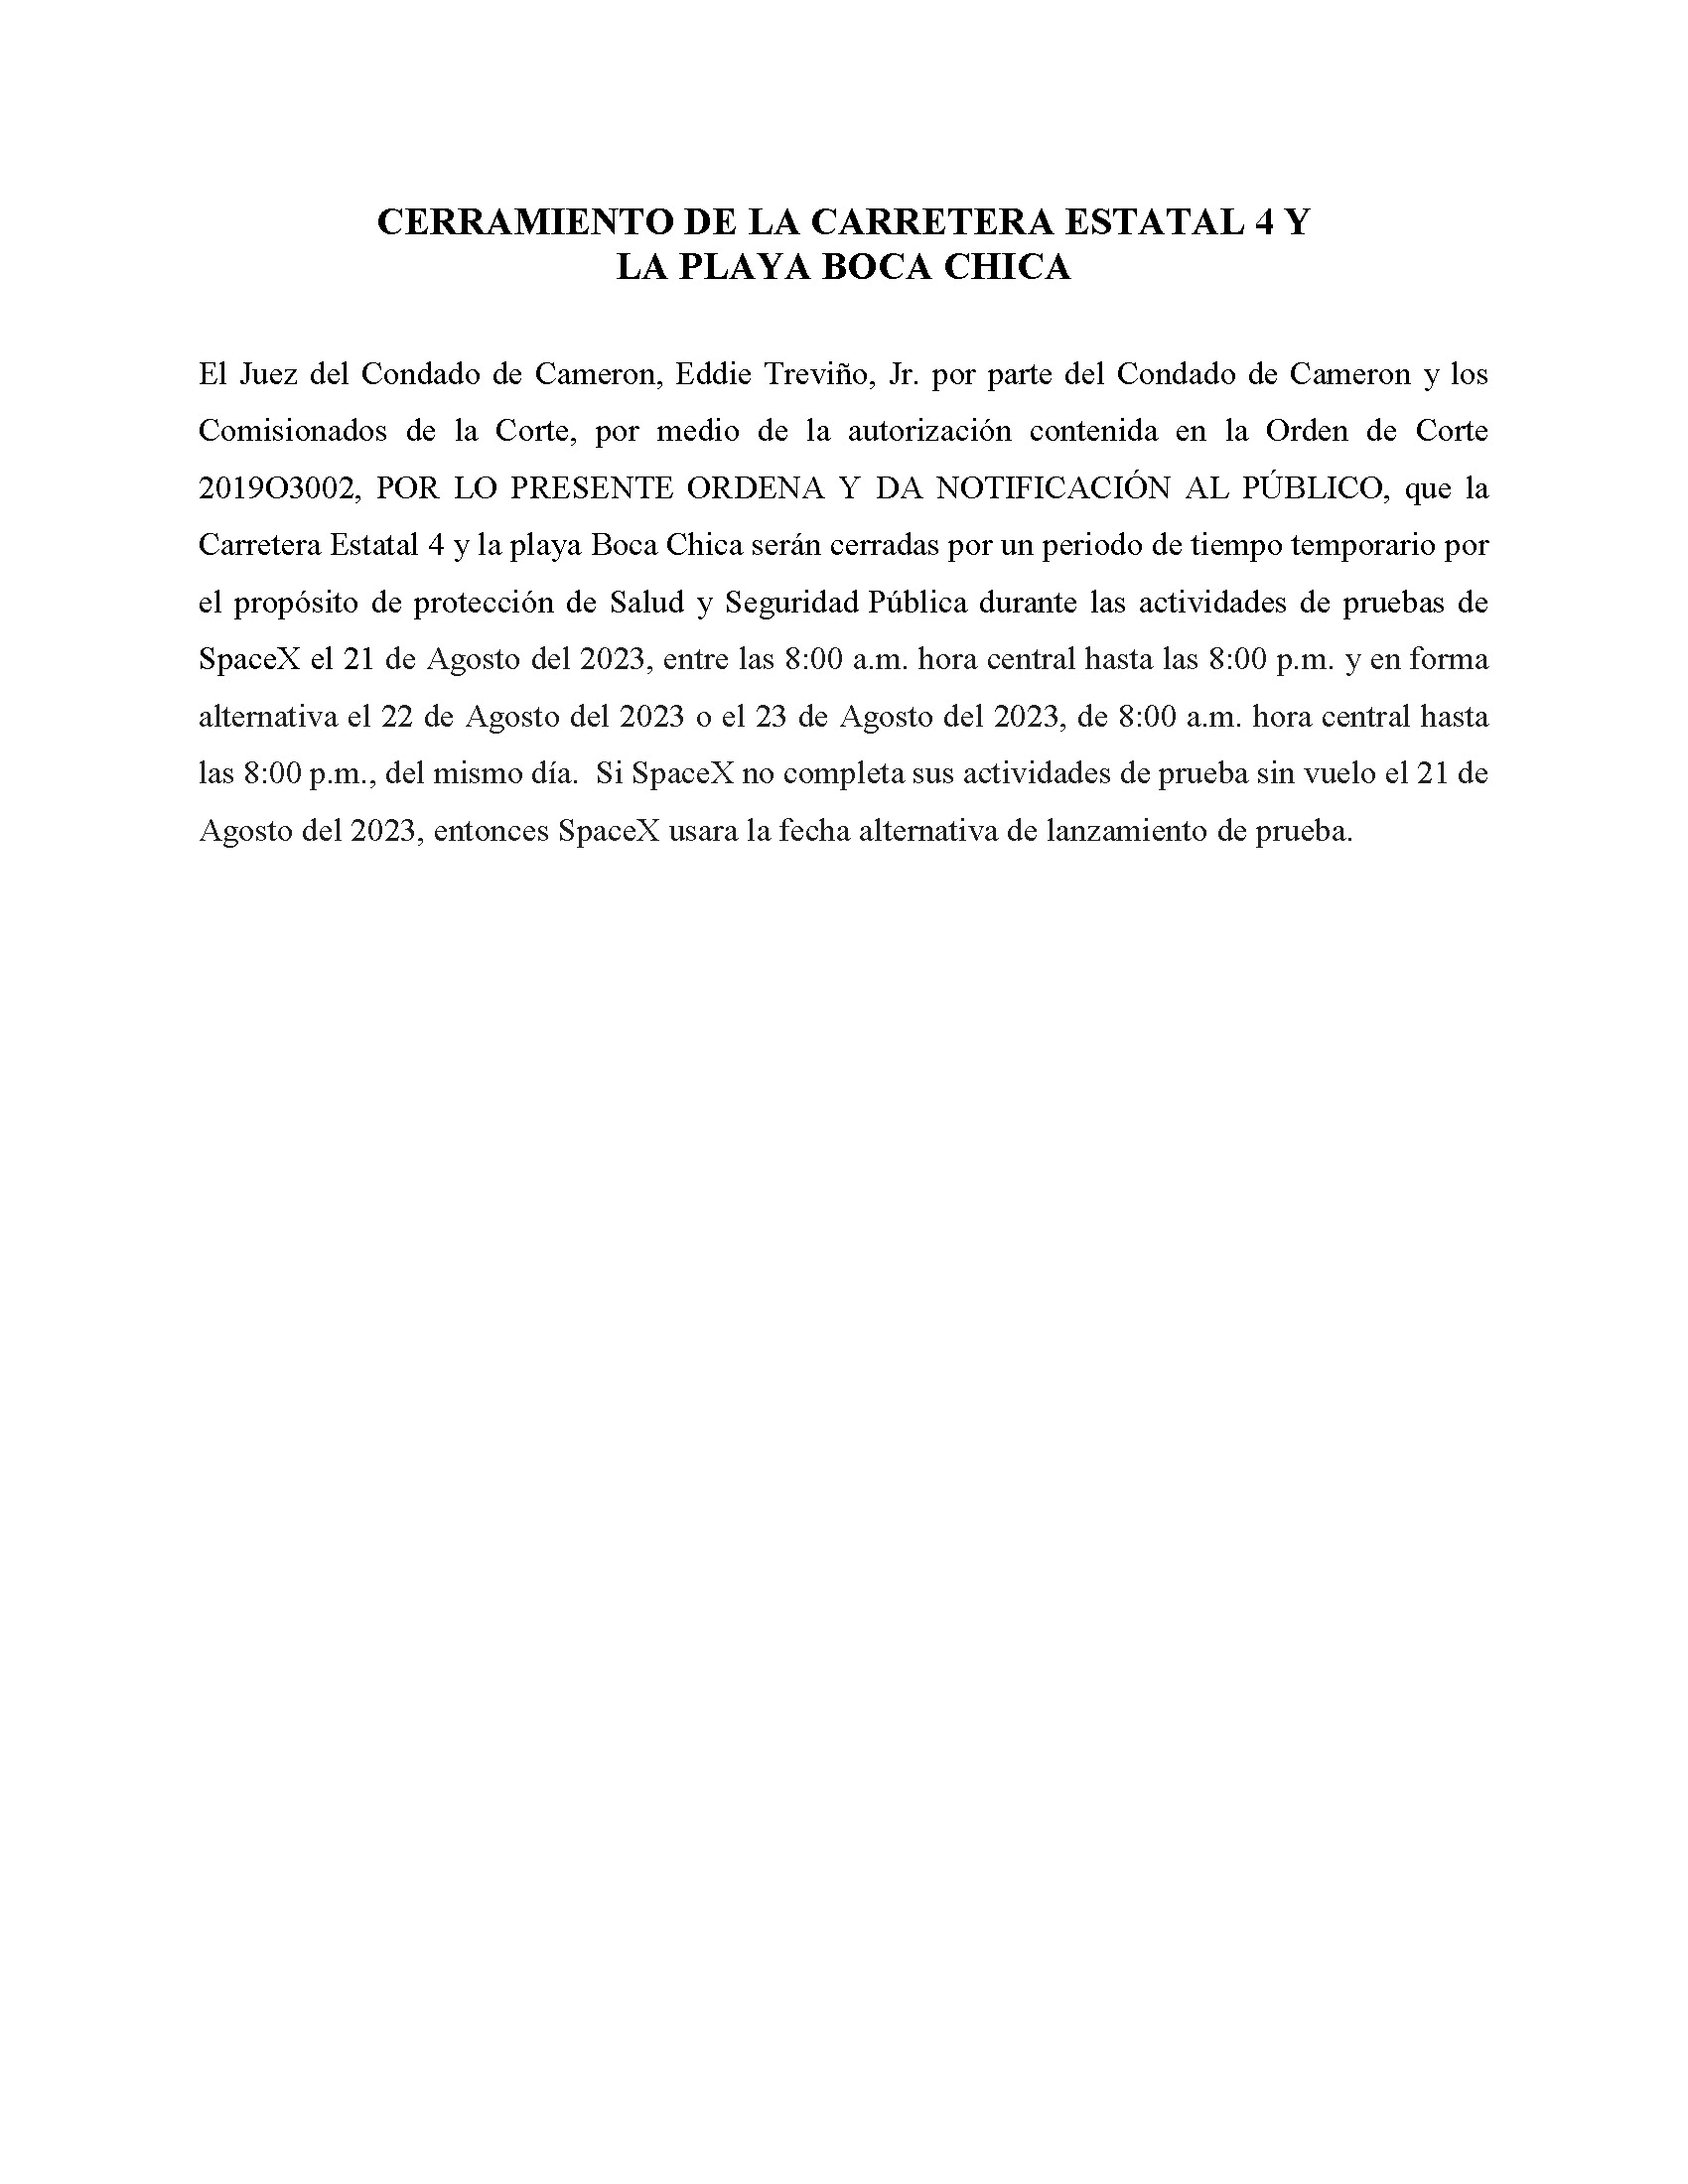 ORDER.CLOSURE OF HIGHWAY 4 Y LA PLAYA BOCA CHICA.SPANISH.08.21.23